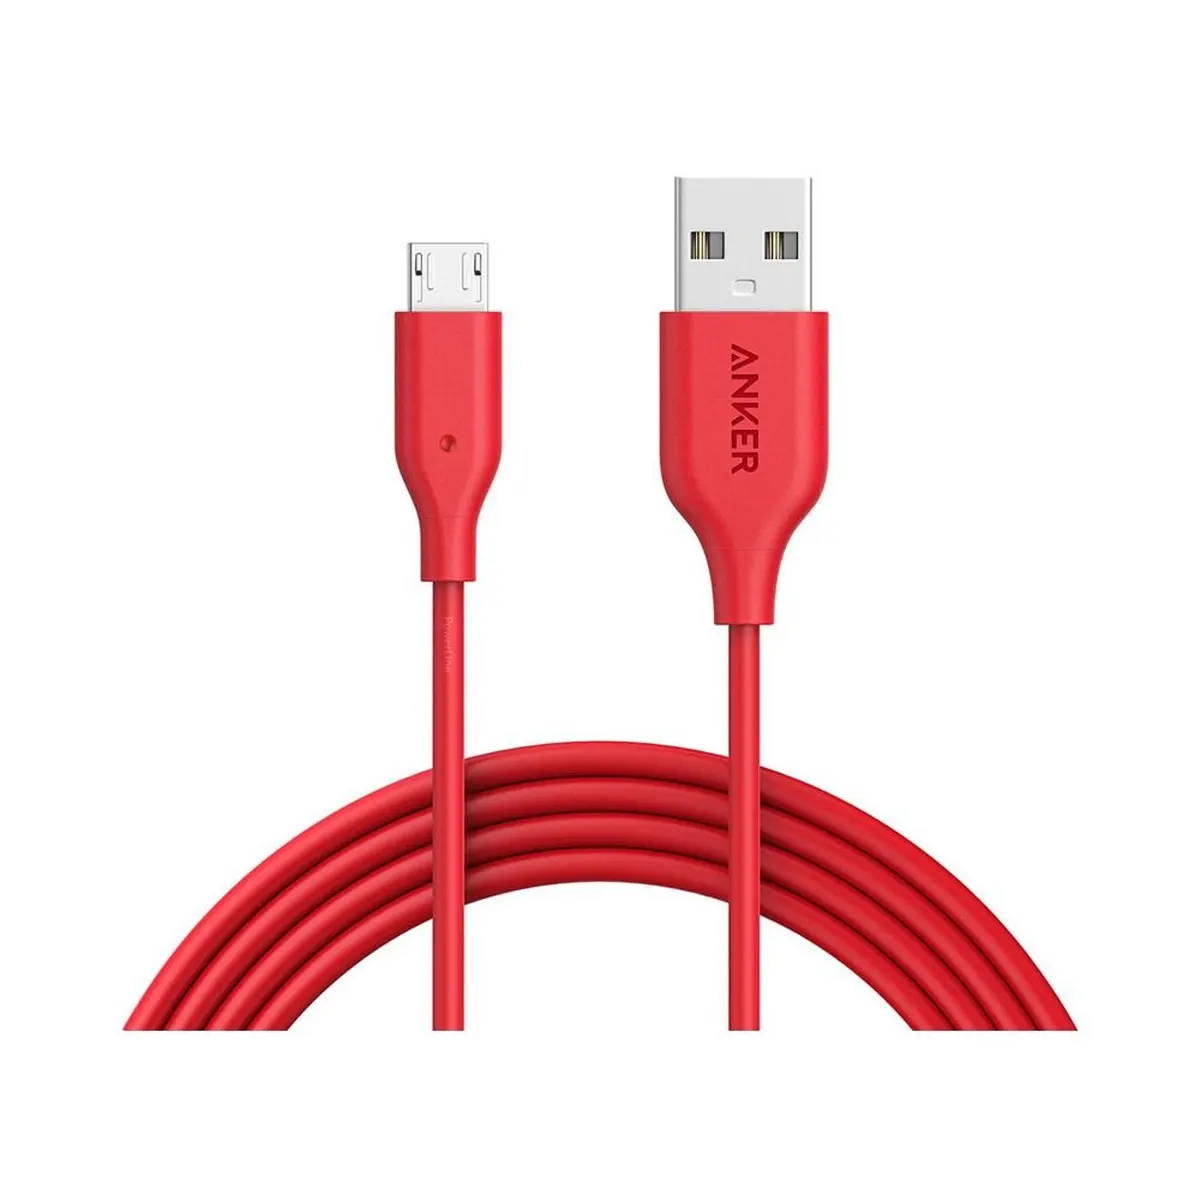 کابل Micro USB انکر 1.8 متر مدل Anker Powerline 1.8m Micro USB Cable (A8133) رنگ قرمز